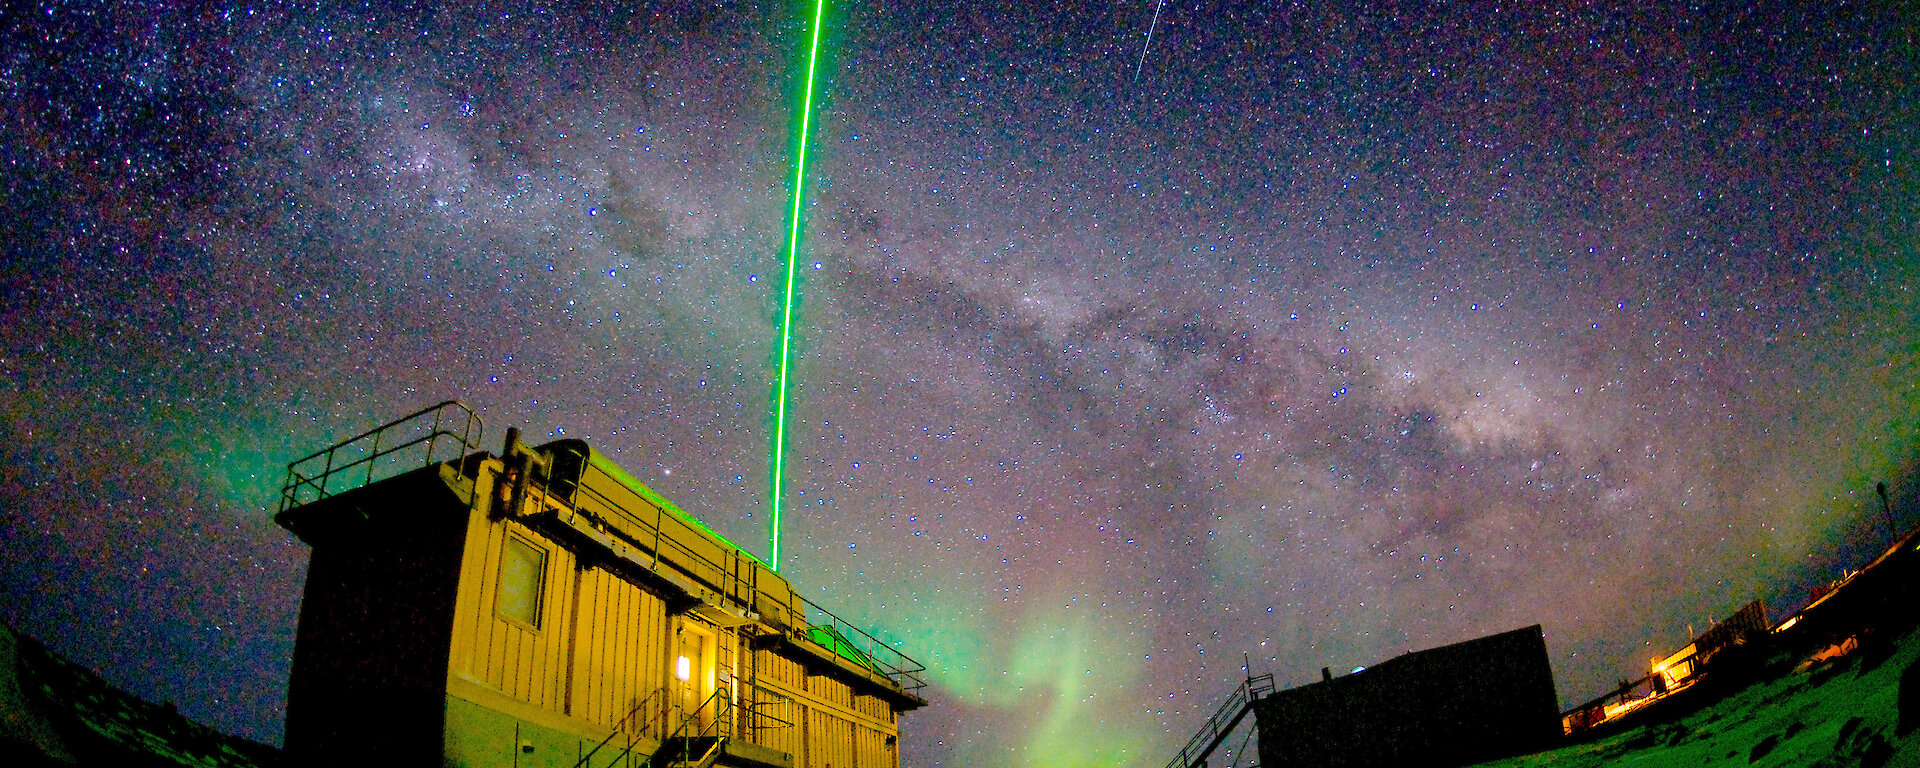 The LIDAR instrument lighting the sky above Australia’s Davis research station